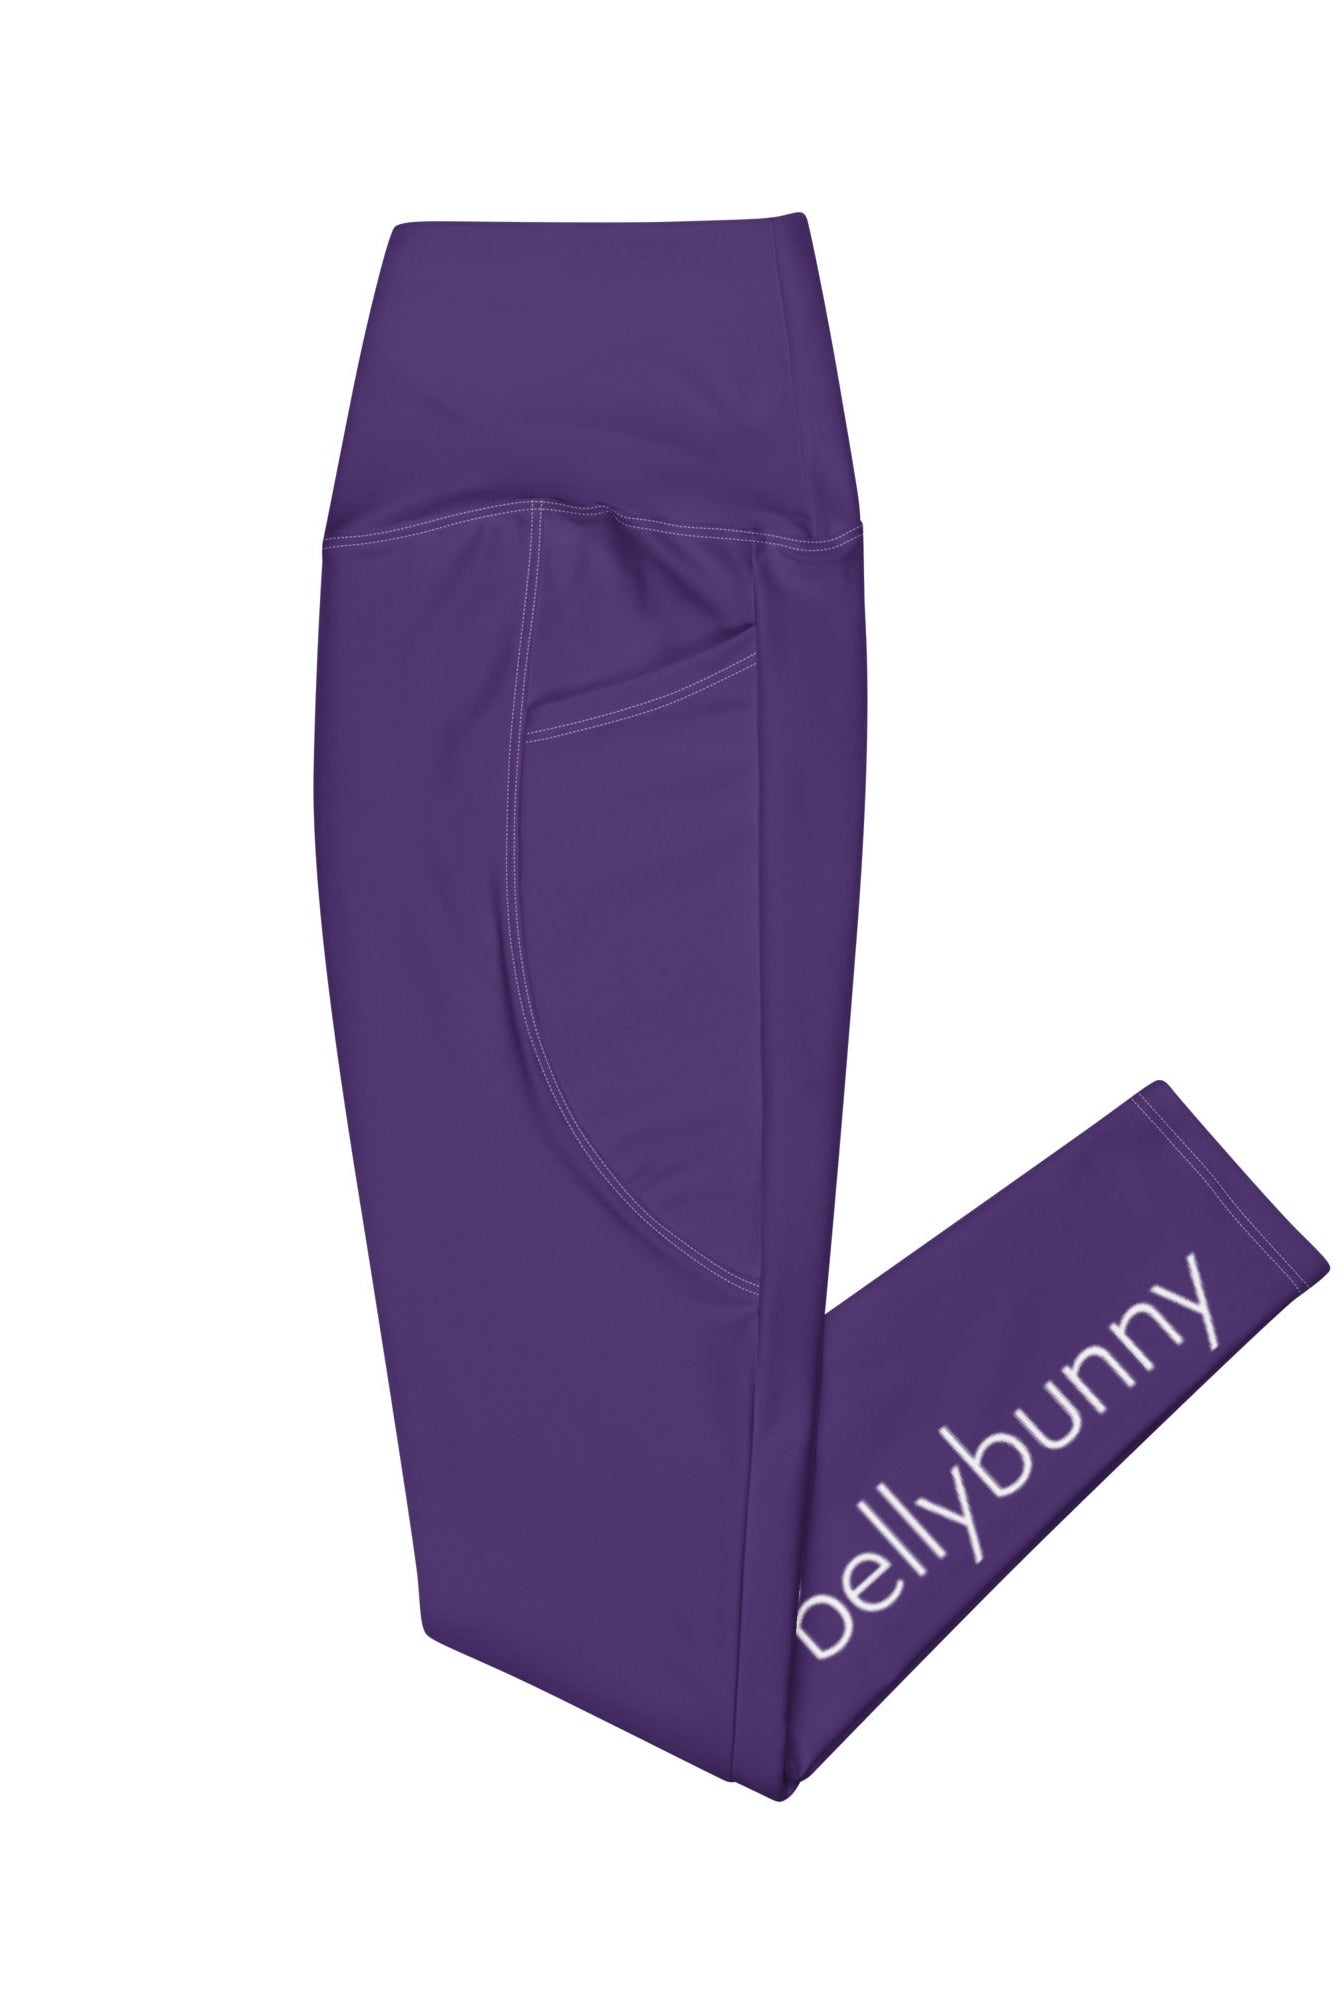 Bellybunny-Women's Crossover Leggings-Purple with White Logo